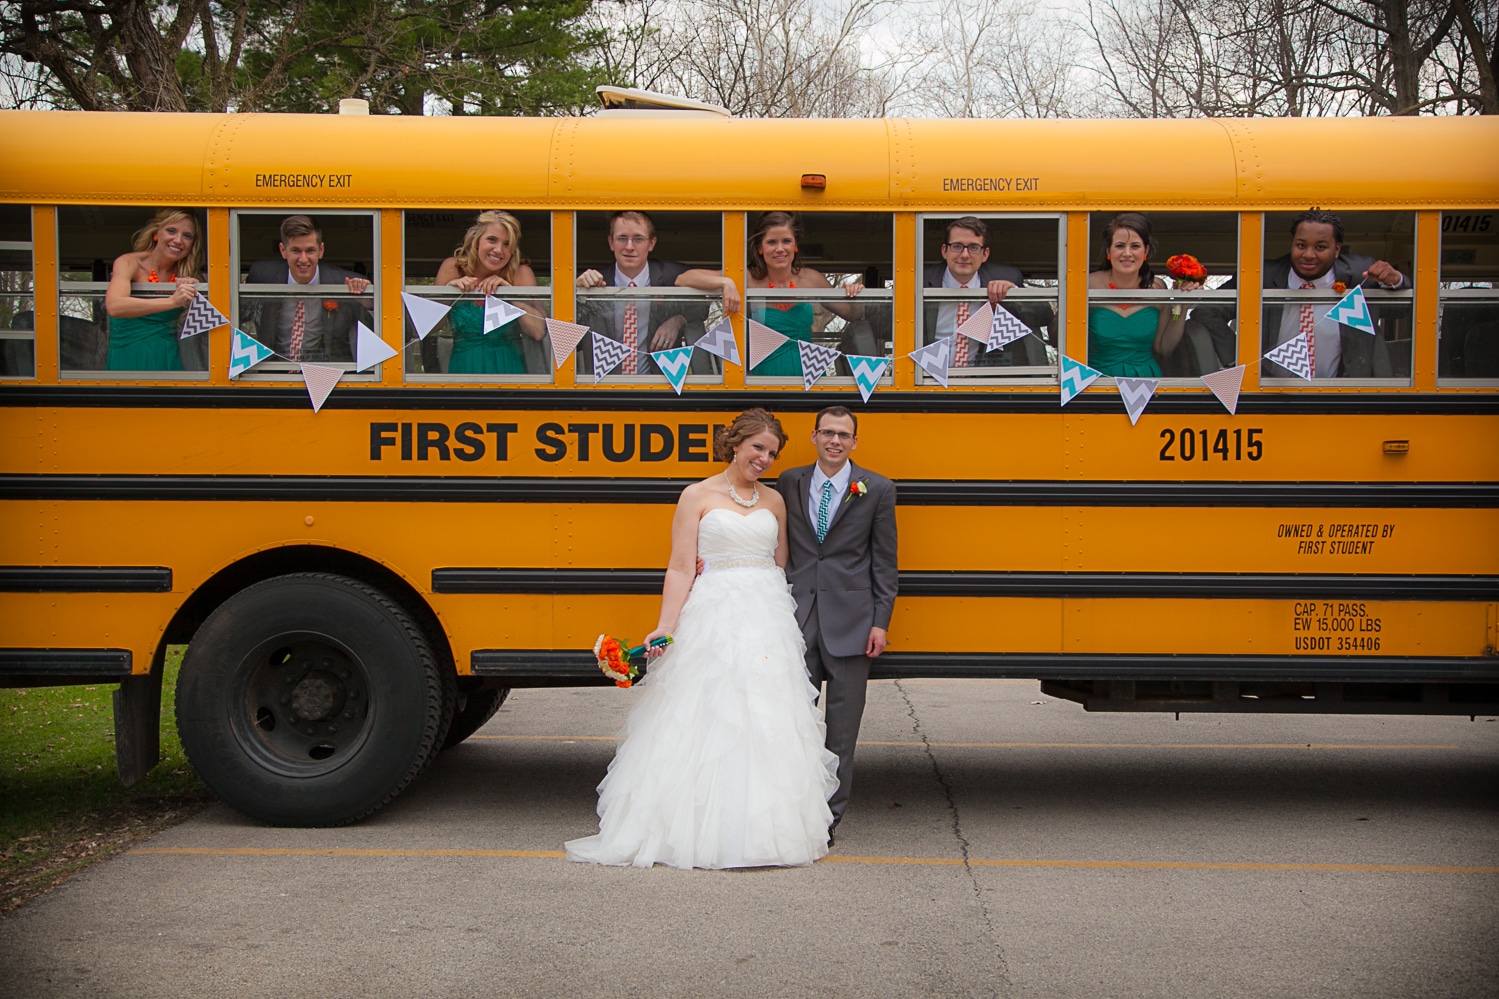 School bus as wedding transportation